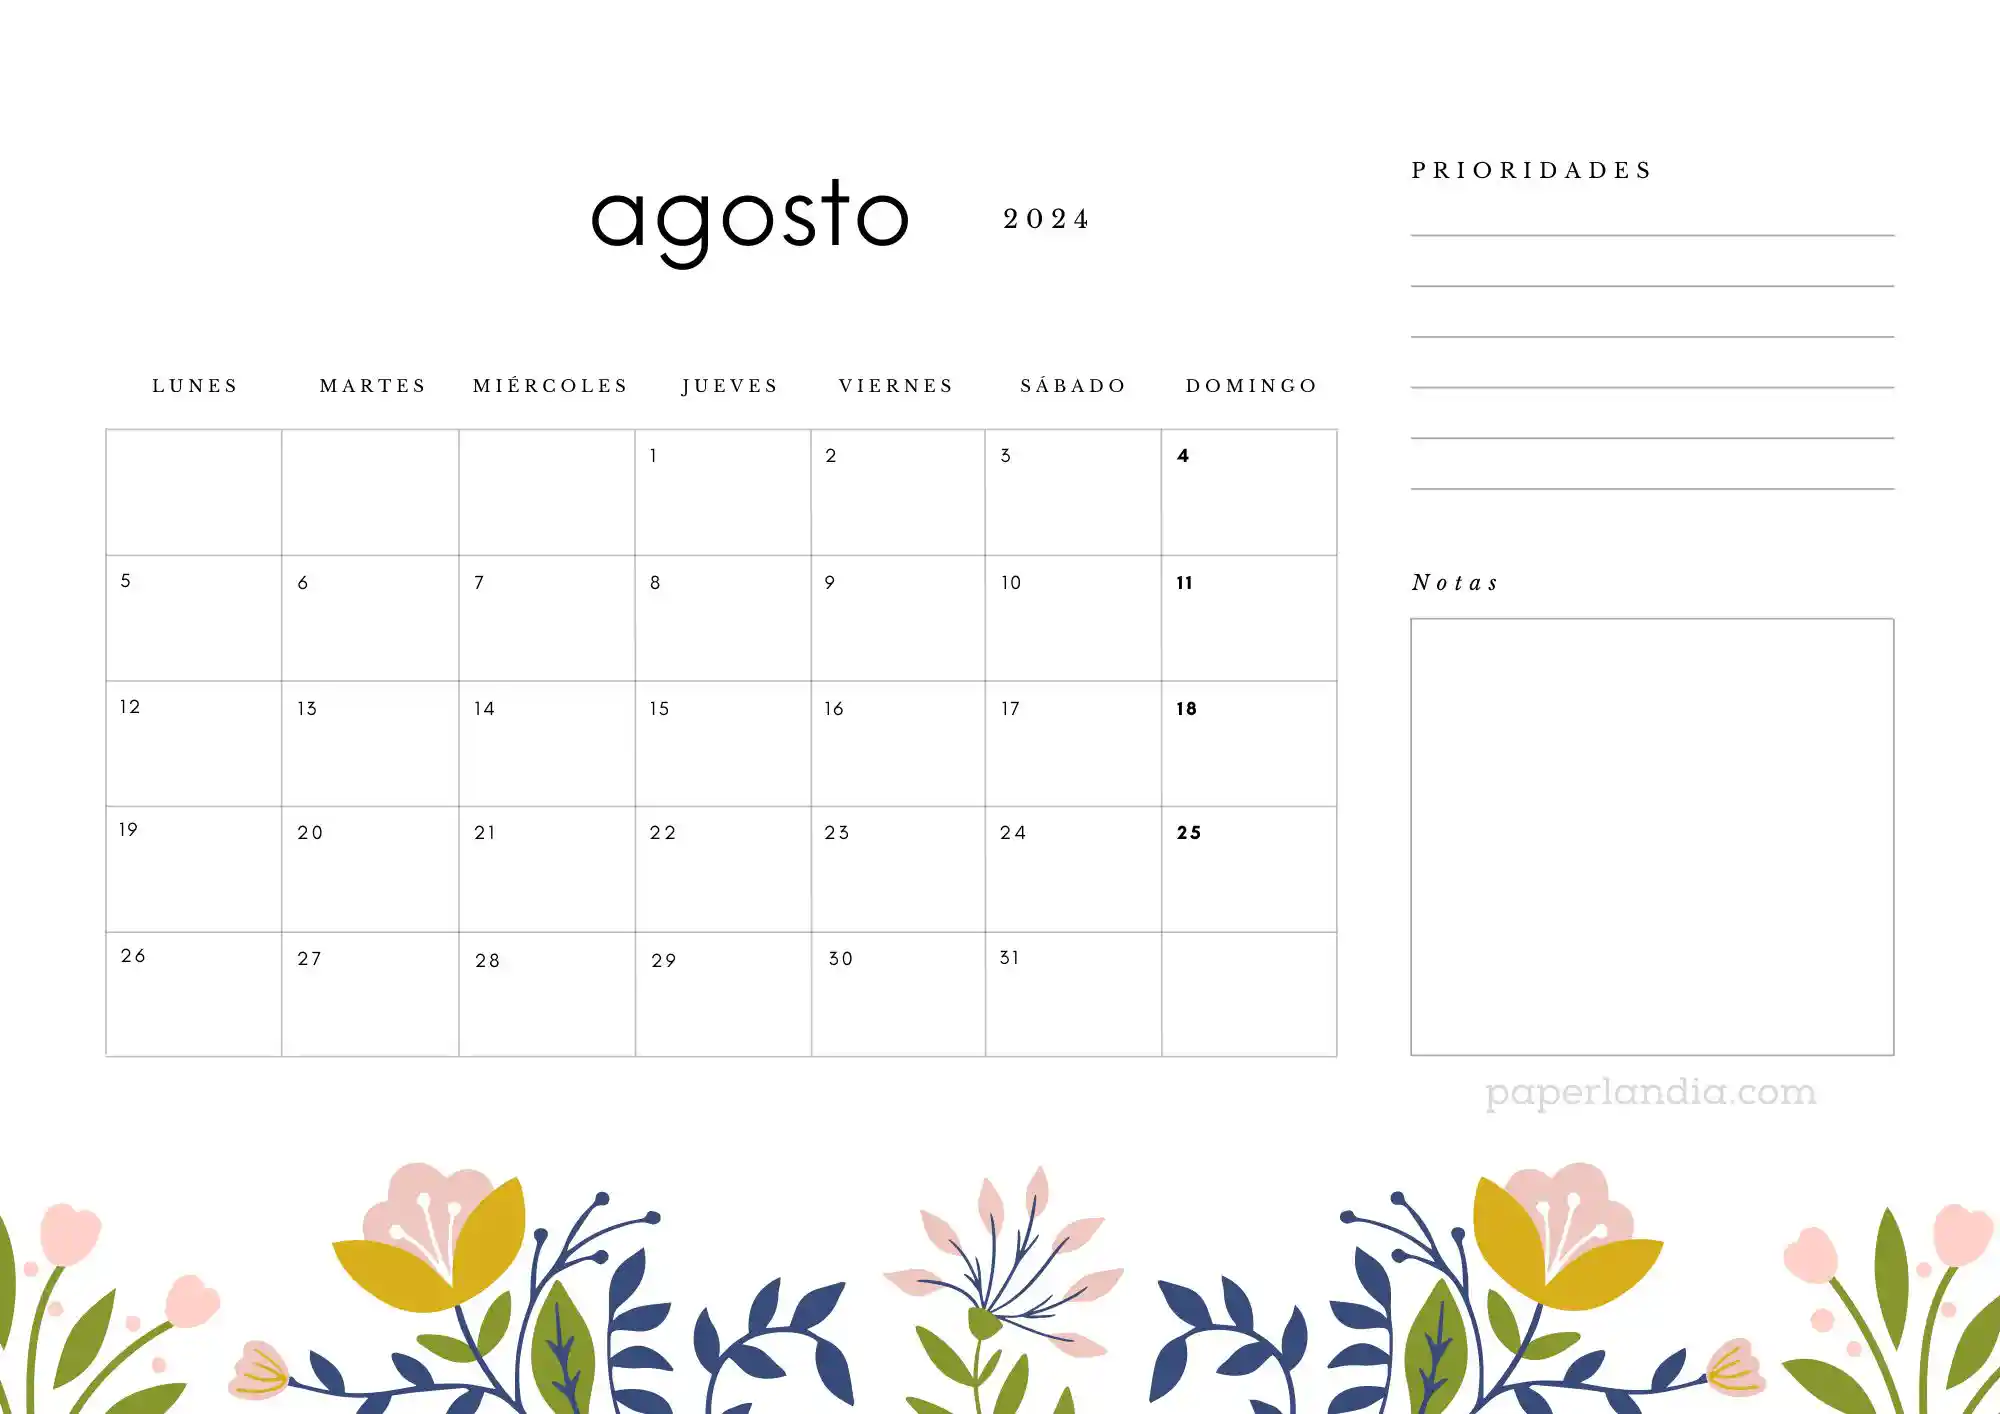 Calendario agosto 2024 horizontal con prioridades notas y flores escandinavas